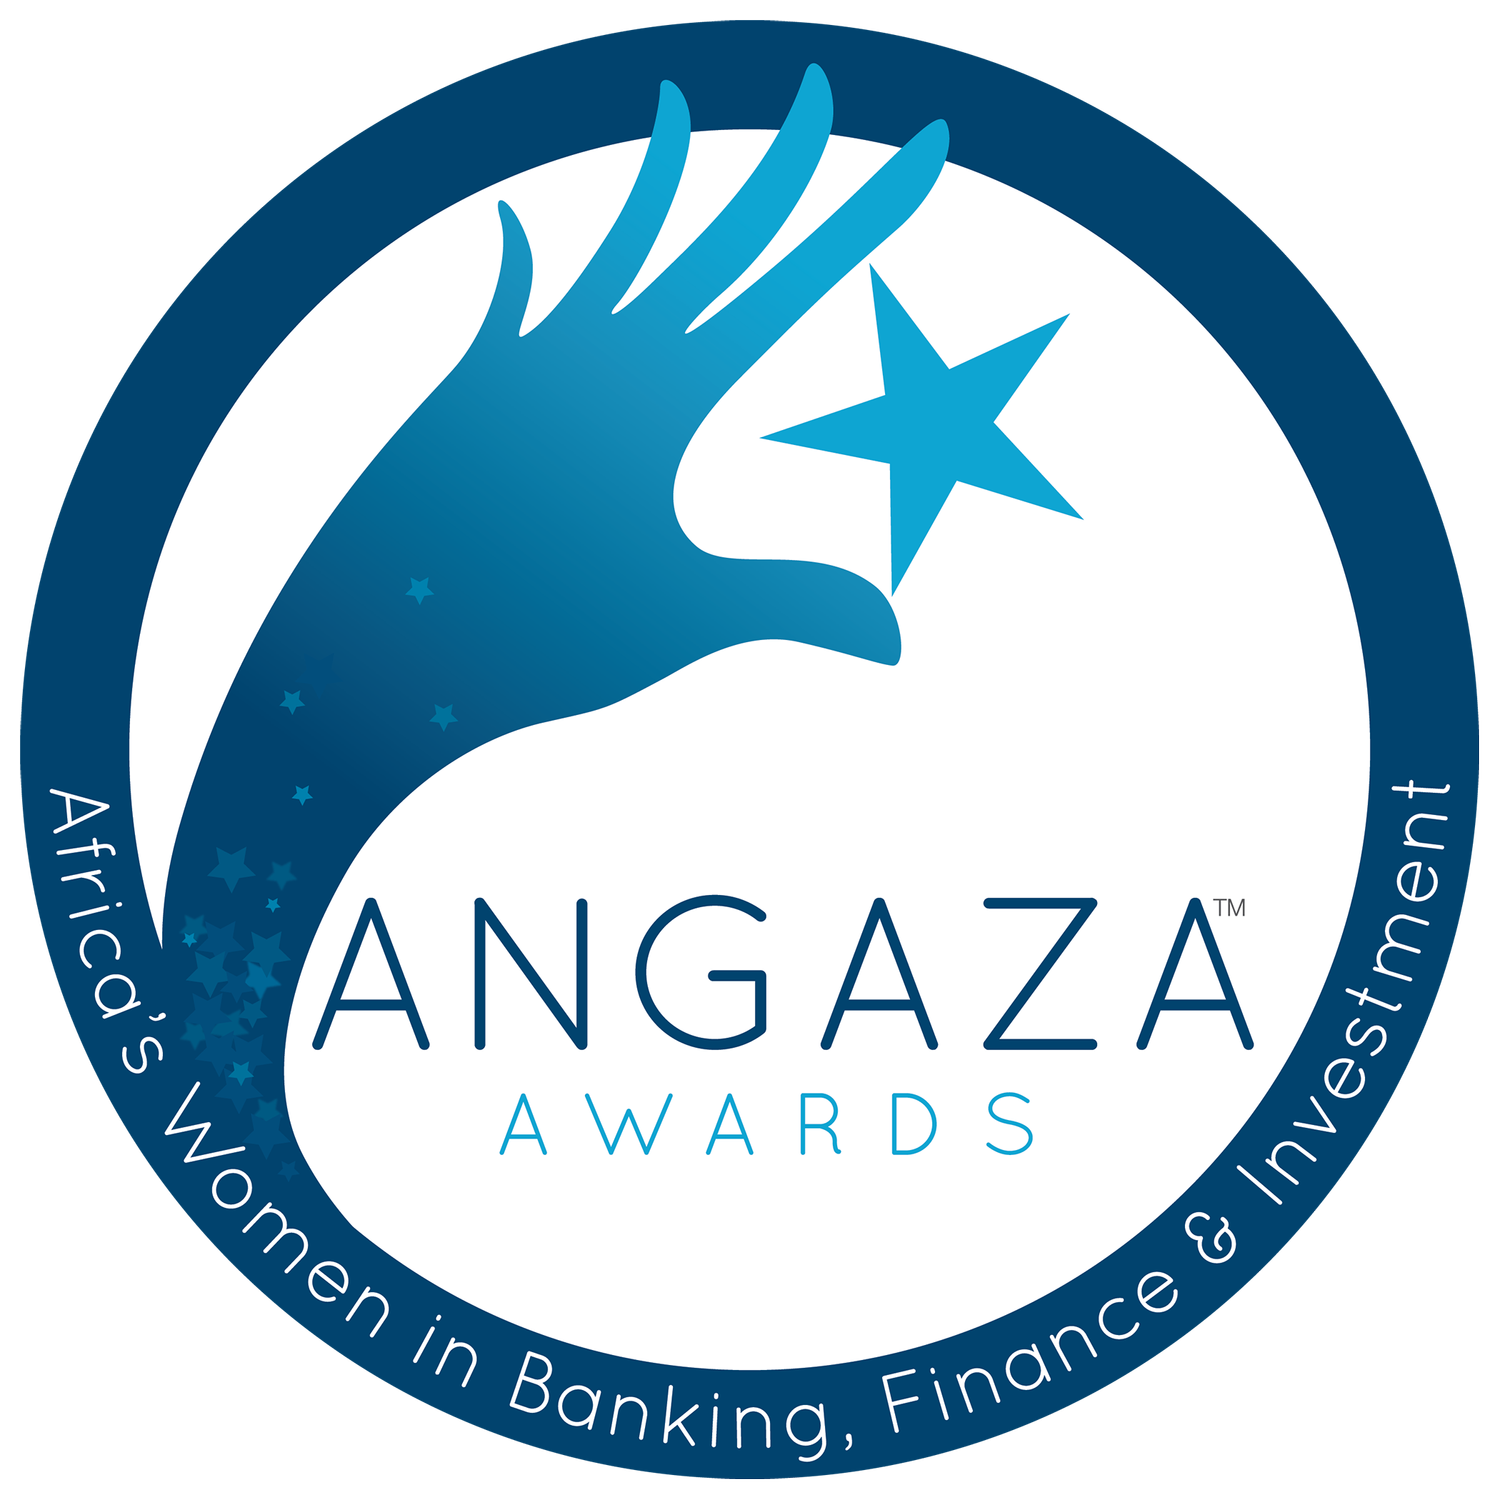 Angaza Awards